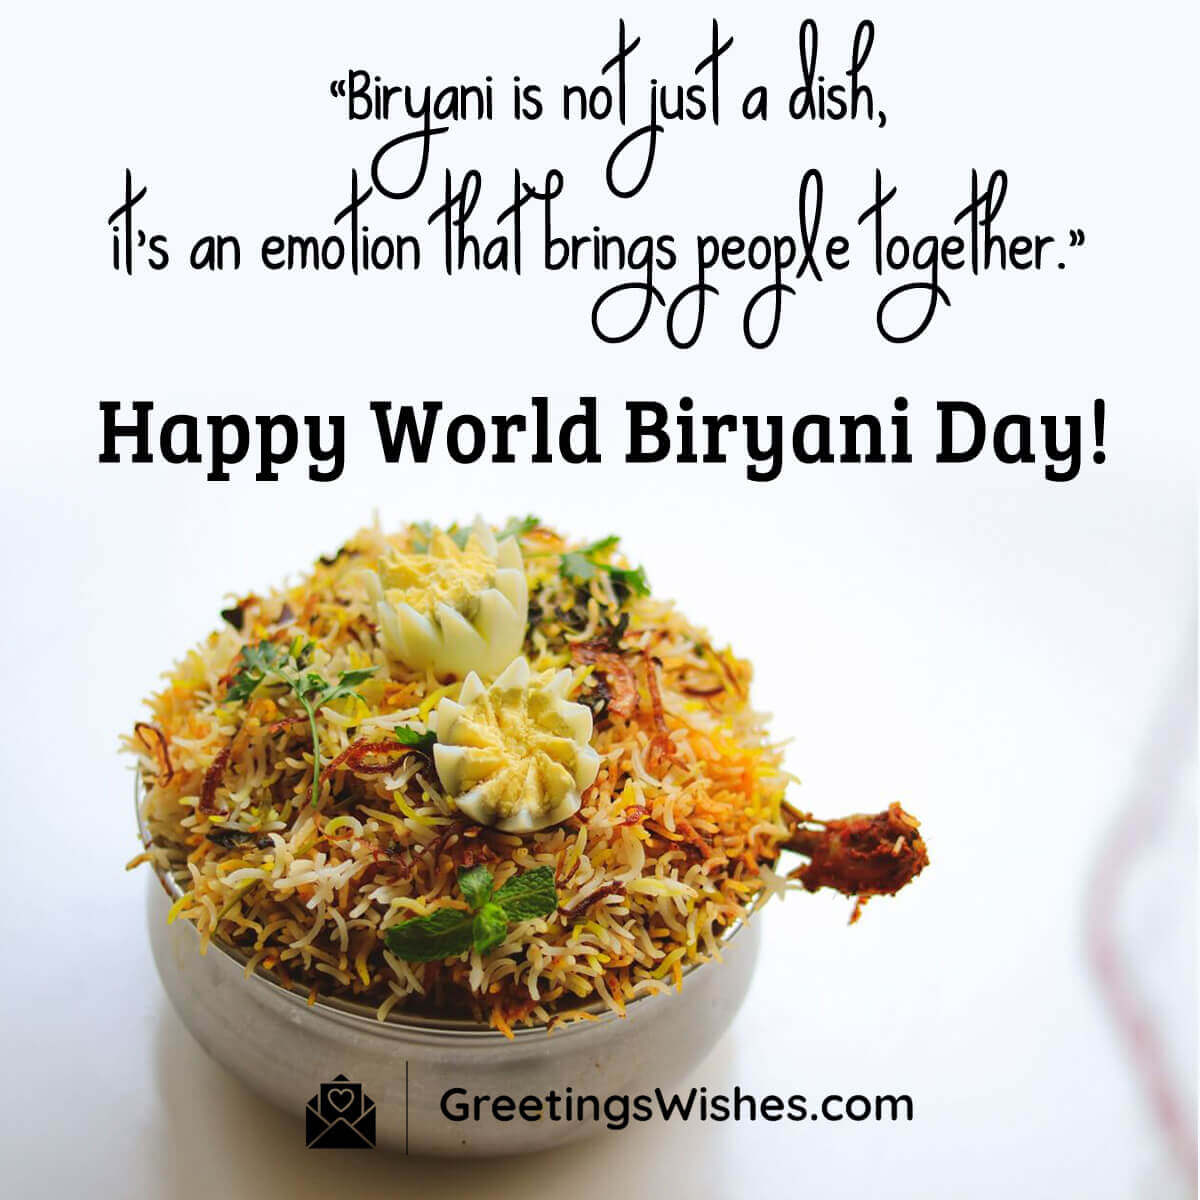 World Biryani Day (11th October)